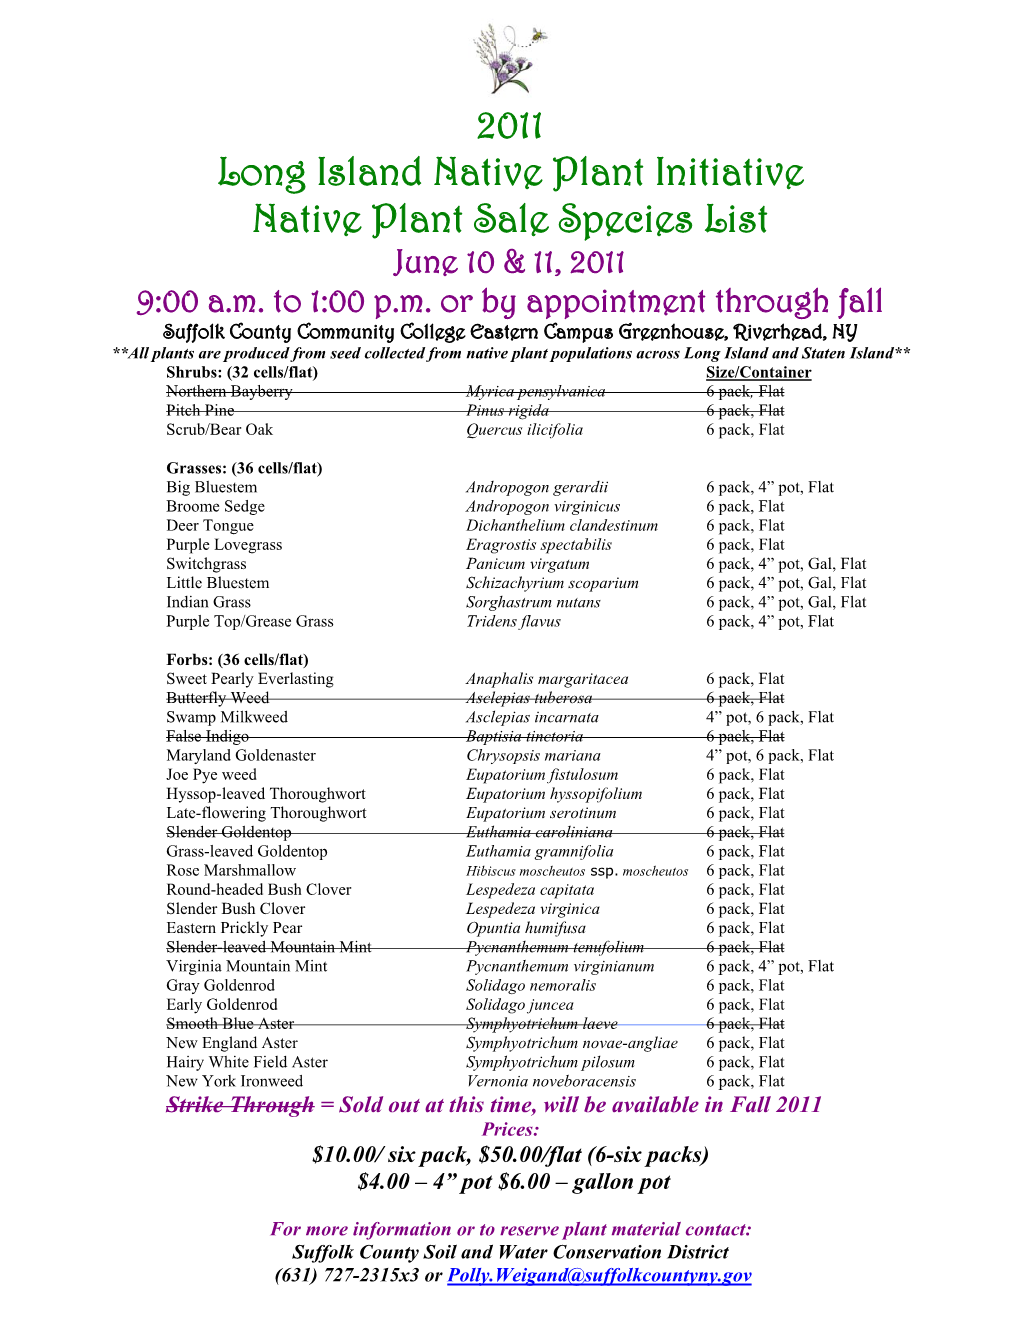 2011 Long Island Native Plant Initiative Native Plant Sale Species List June 10 & 11, 2011 9:00 A.M